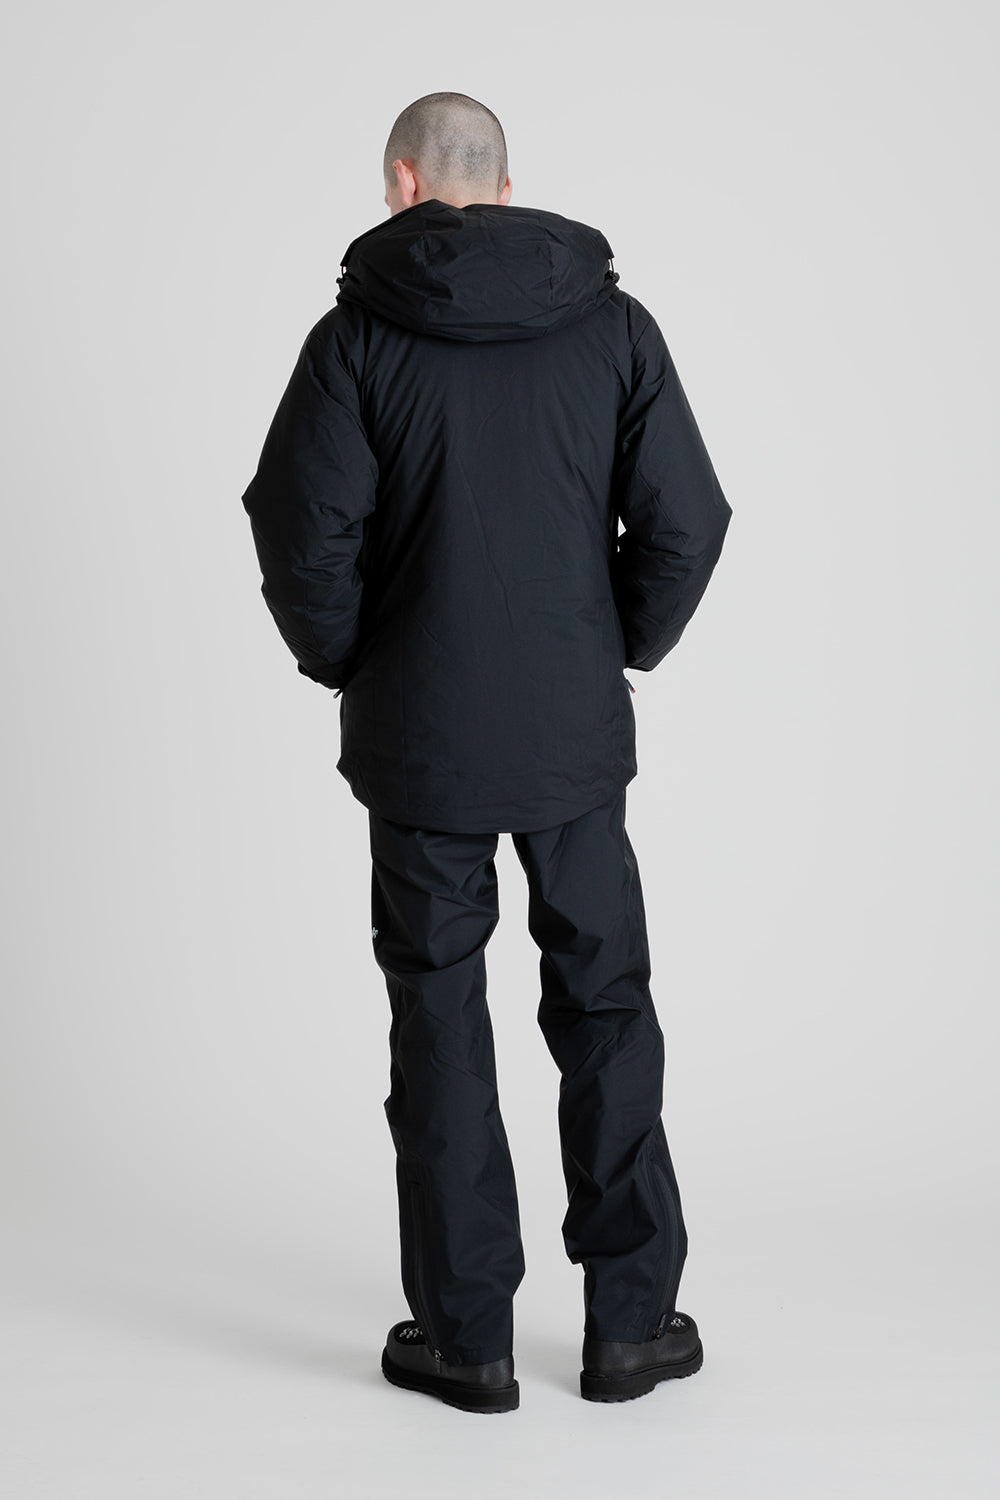 Tilak Svalbard Hood Jacket in Caviar Black